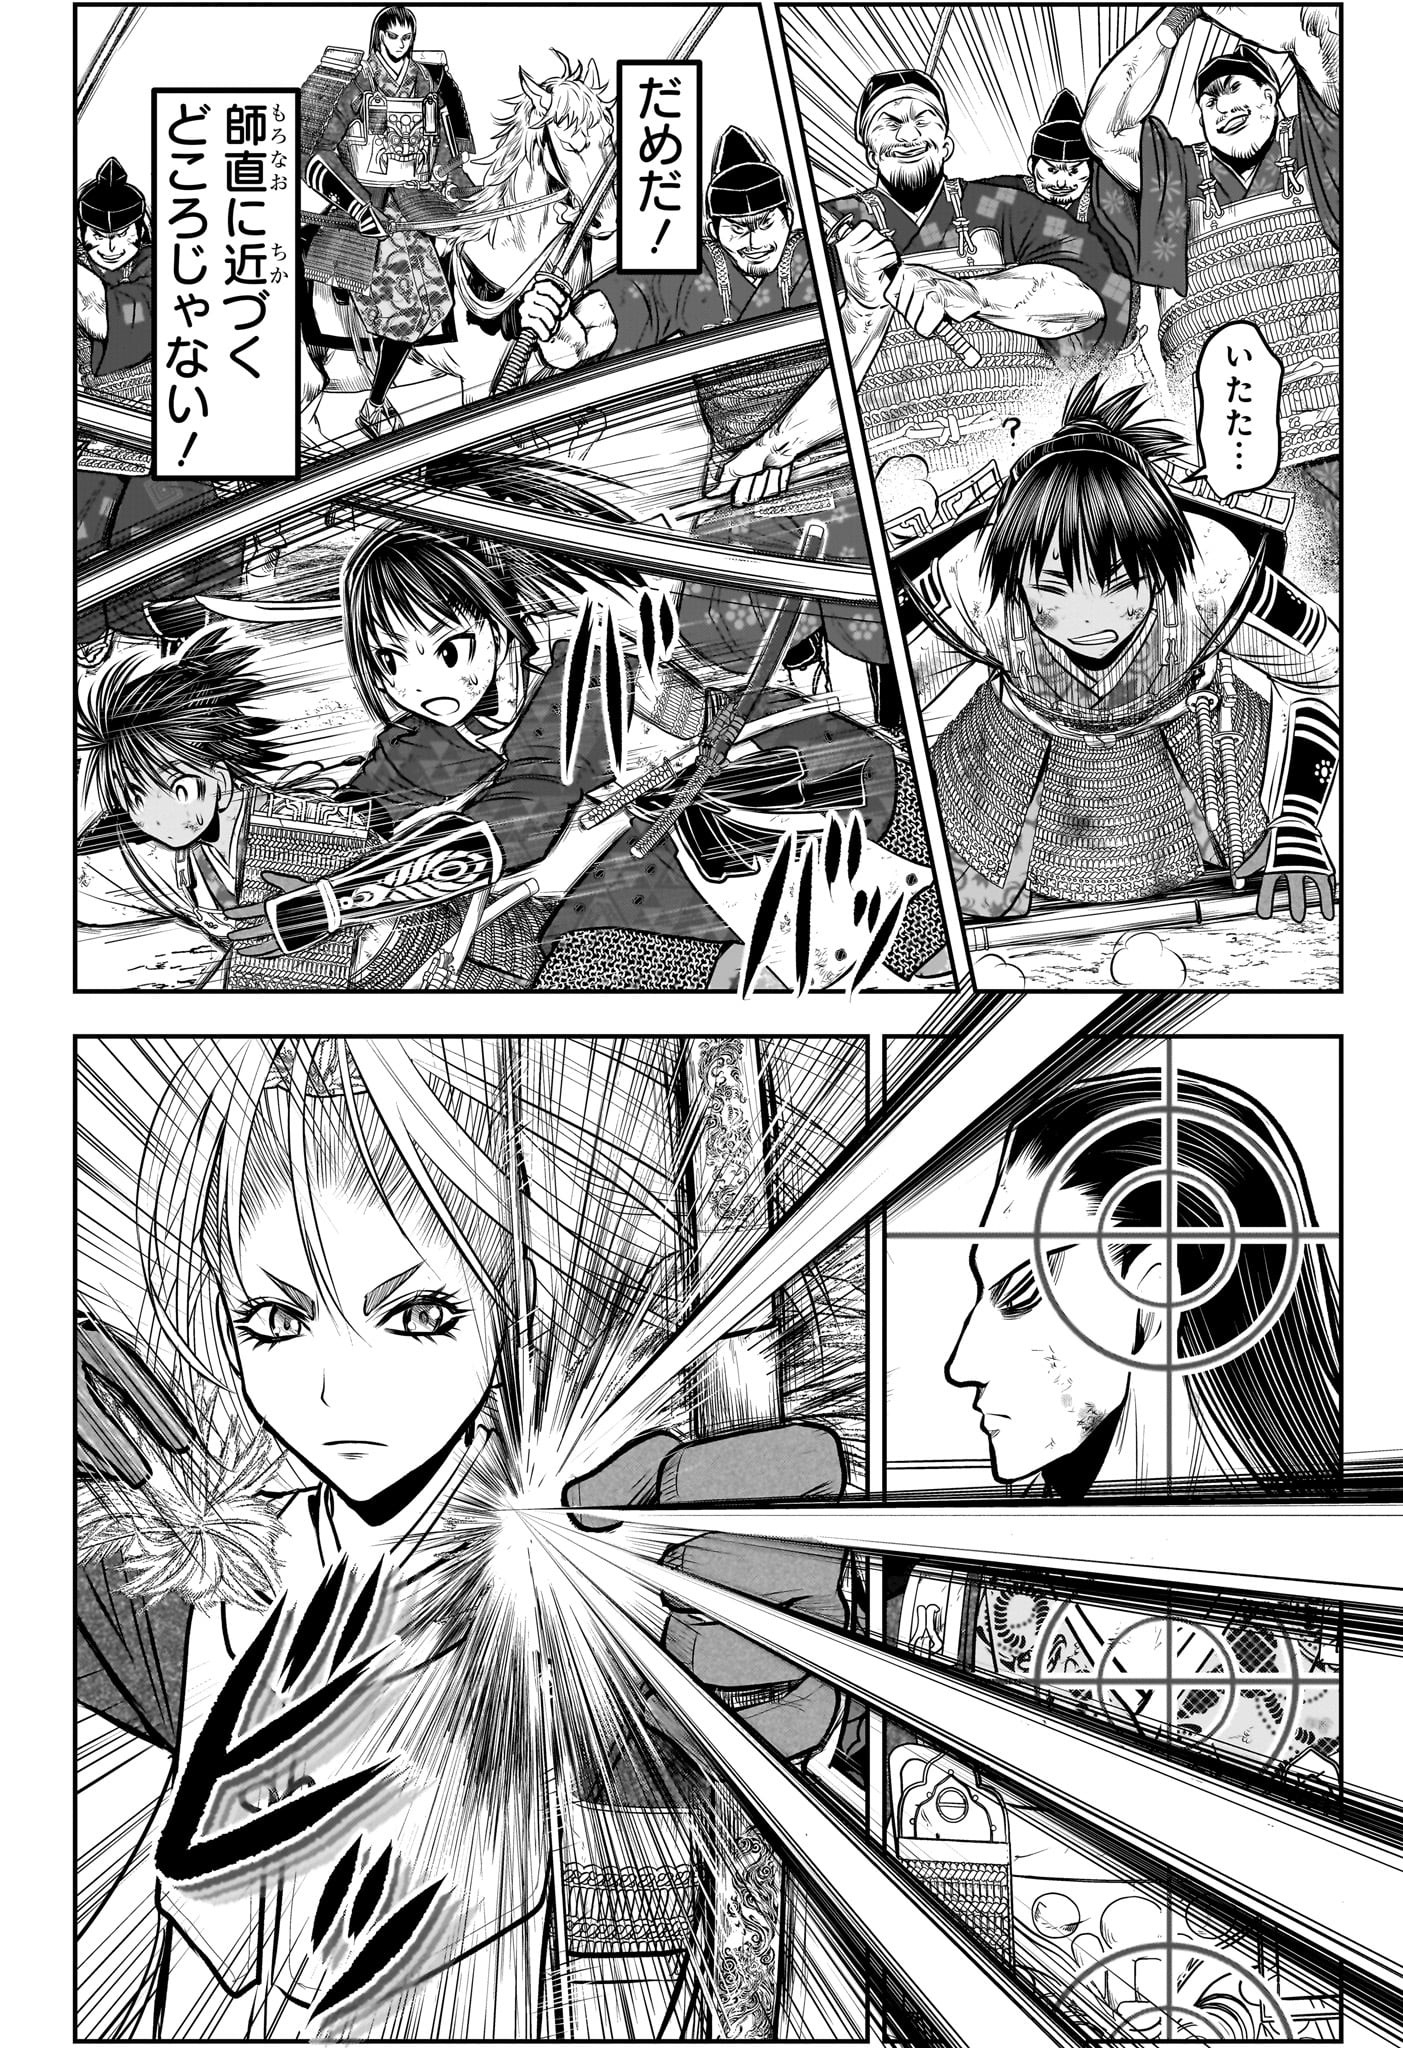 Nige Jouzu no Wakagimi - Chapter 164 - Page 6